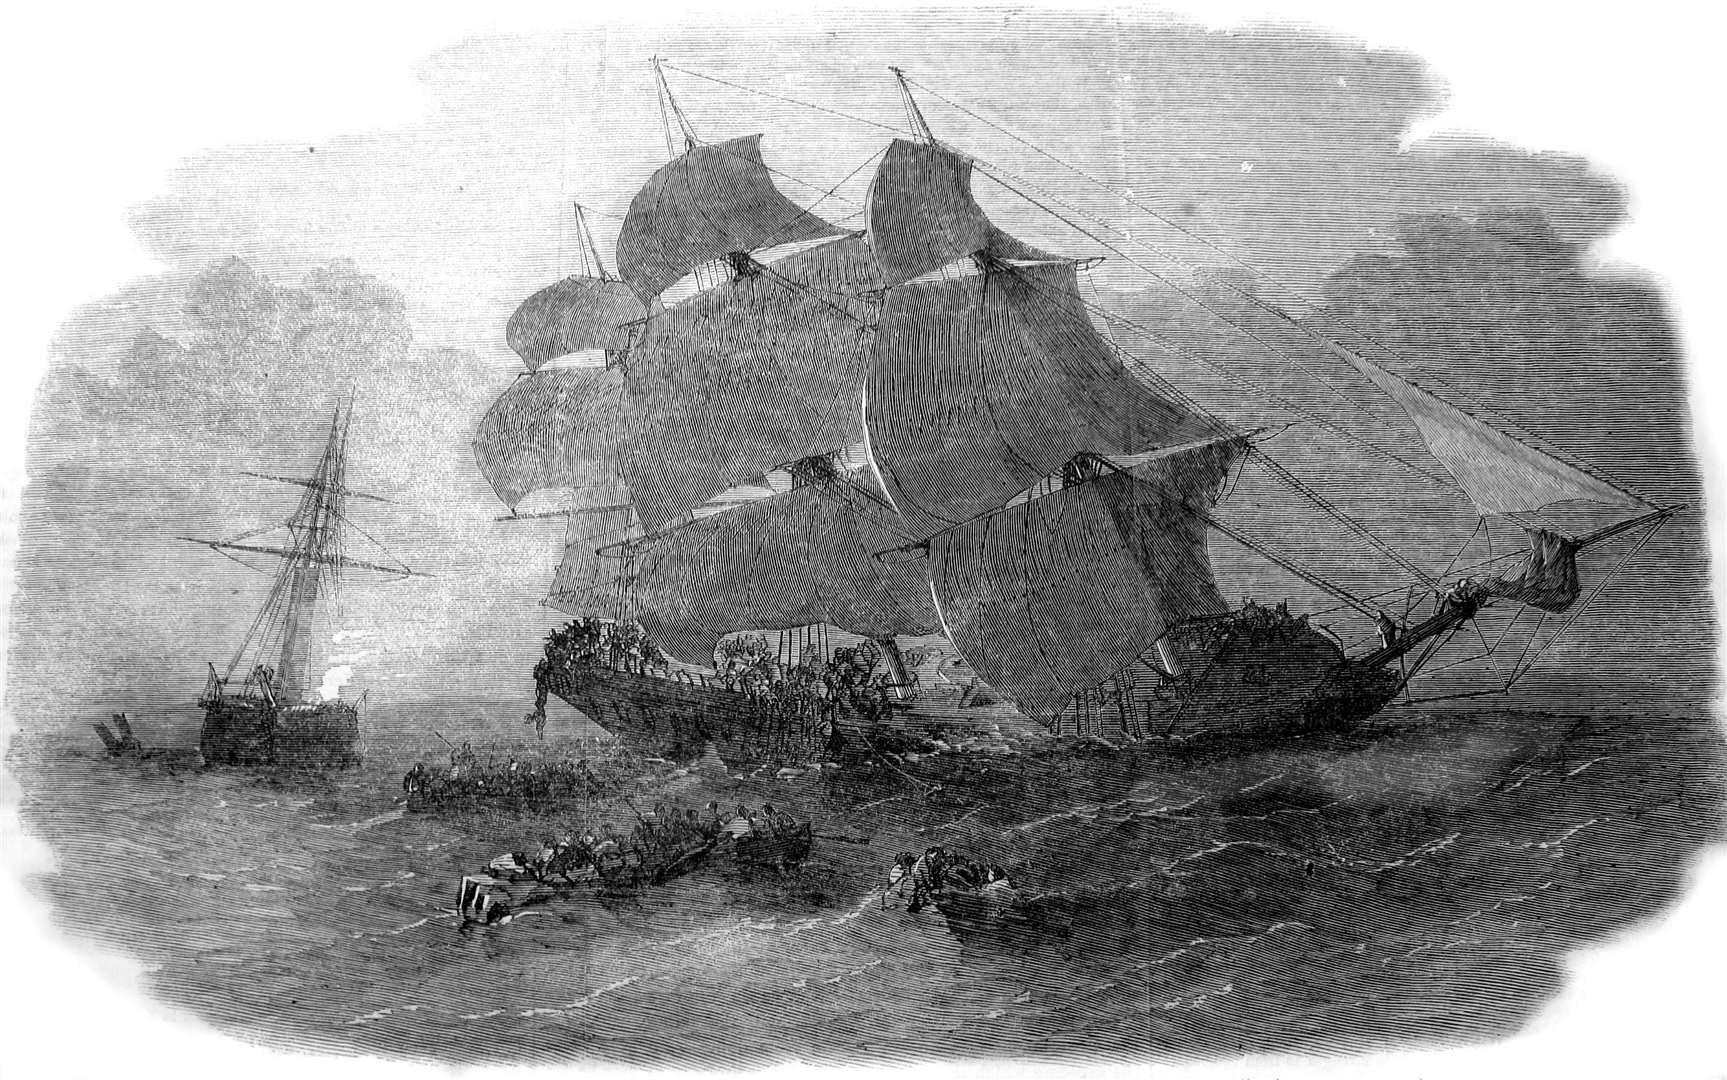 The Josephine Willis sank 167 years ago. Picture: Historic England